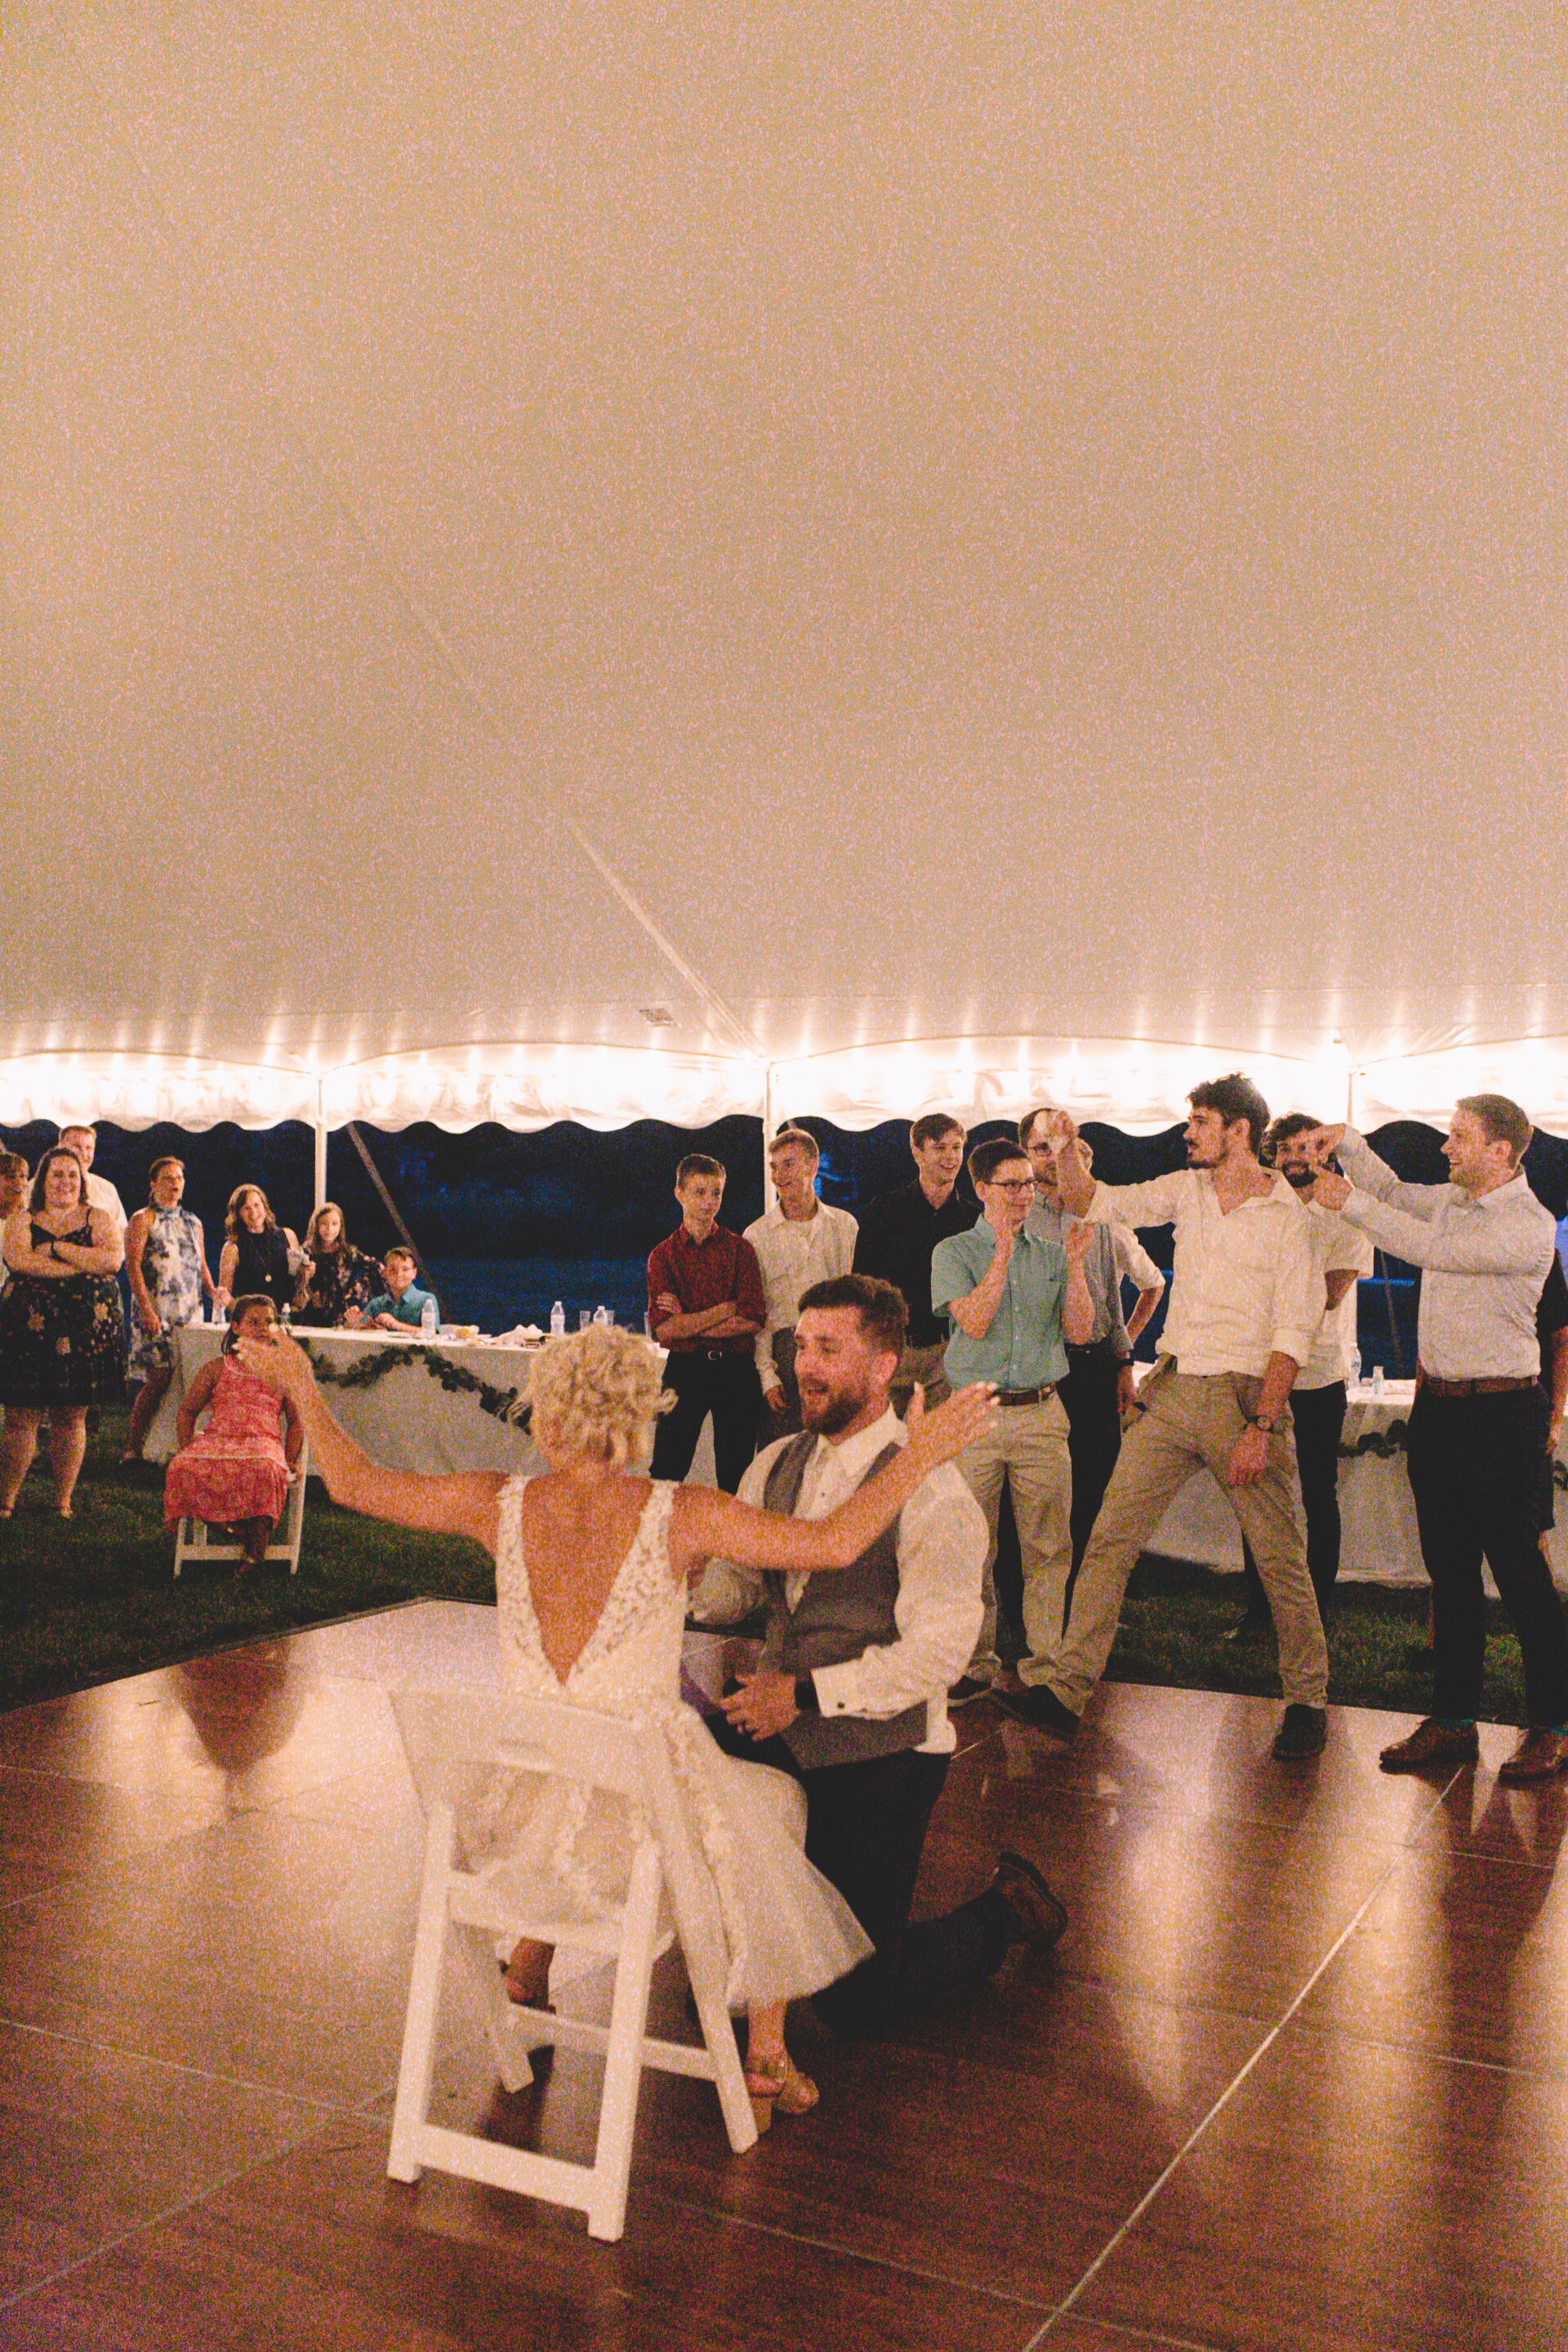 Matt + McKenah Fishers, IN Backyard Wedding Reception Speaches, Dancing, Cake (41 of 51).jpg